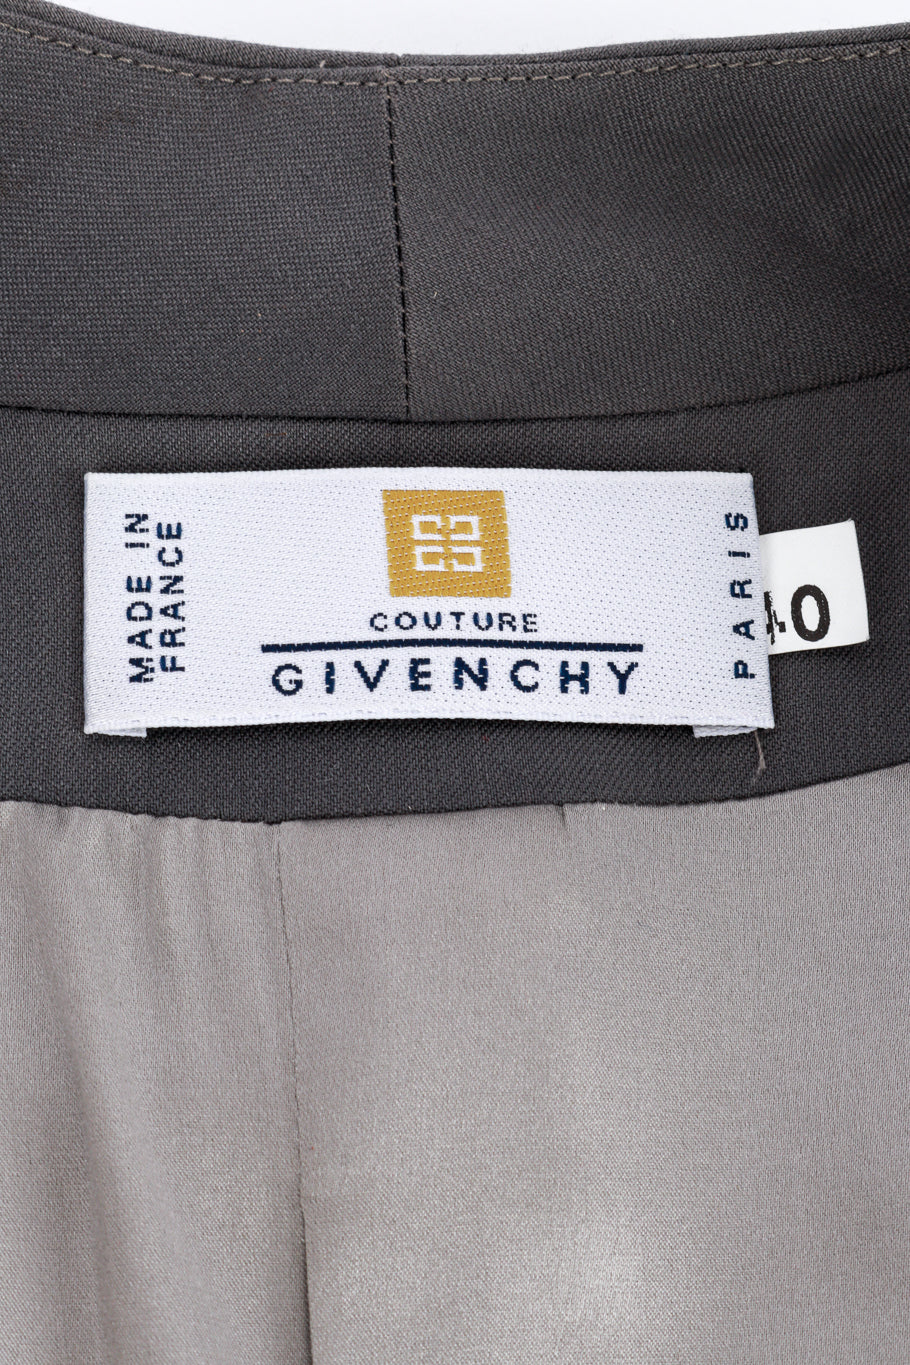 Vintage Givenchy 1999 F/W Circuit Board Zip Up Jacket & Skirt Set jacket signature label closeup @recess la